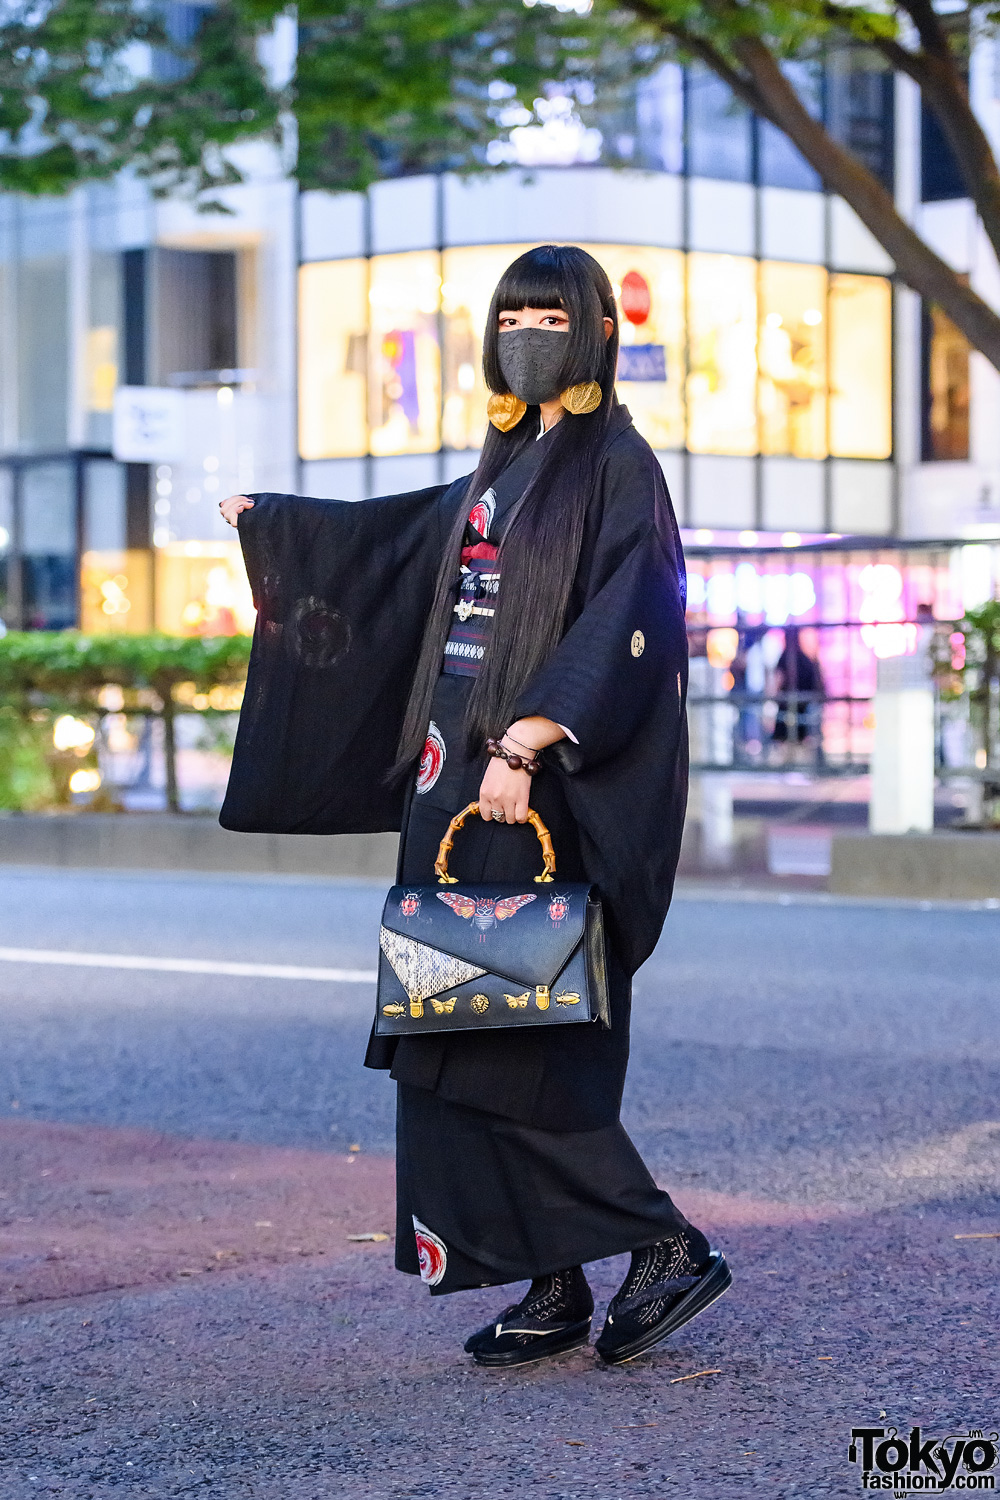 modern japanese kimono